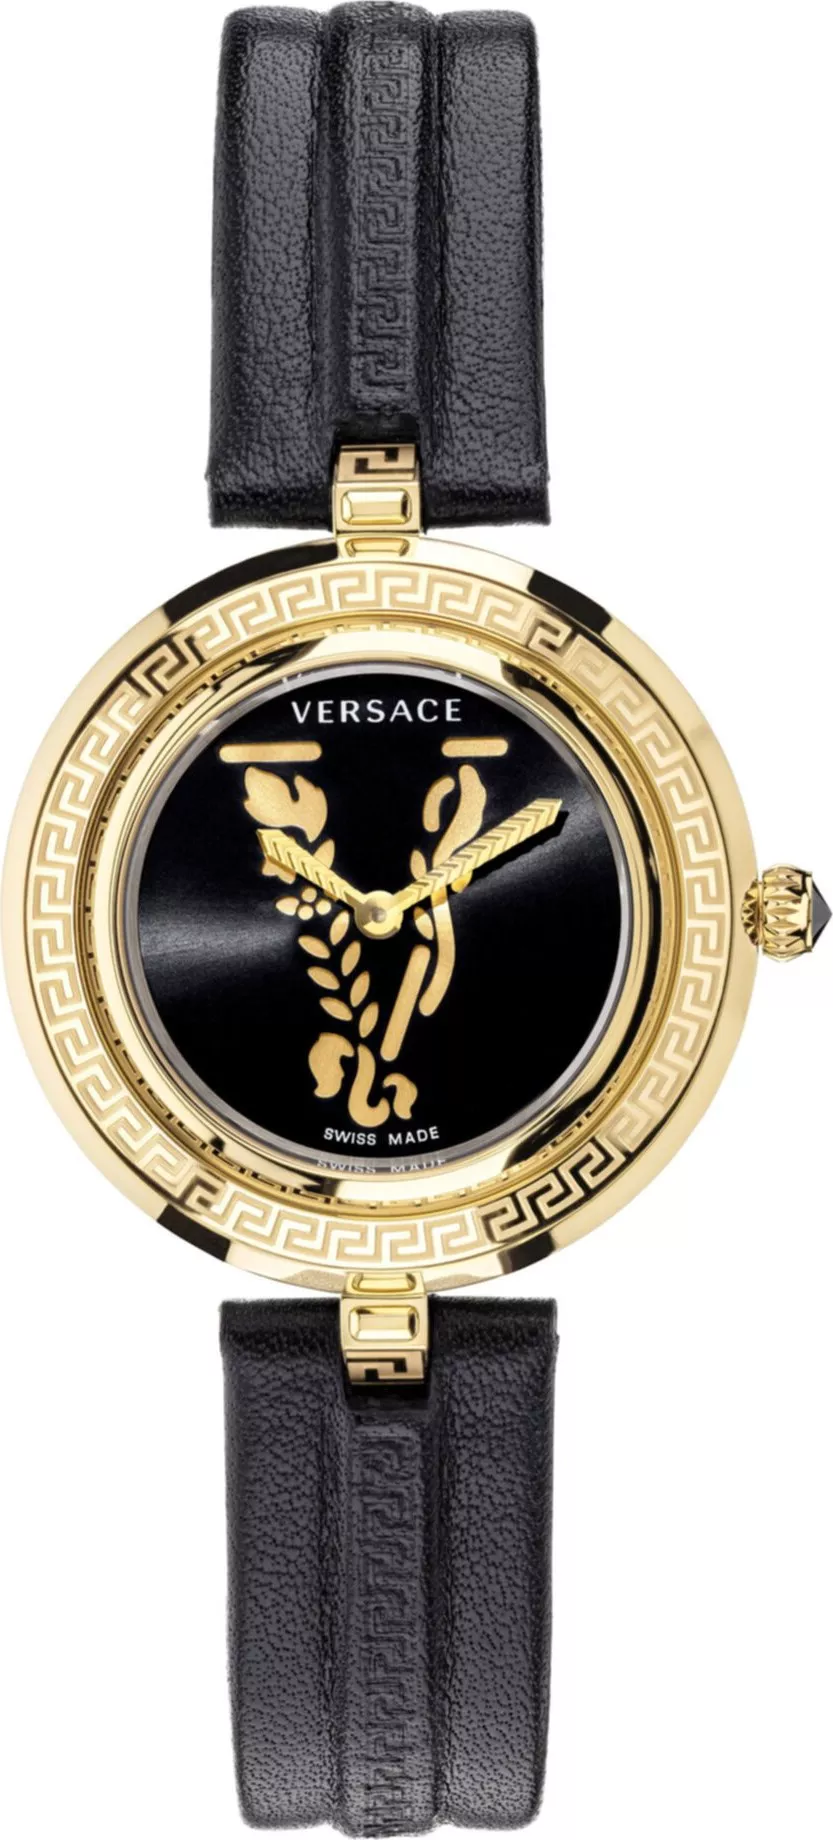 MSP: 97408 Versace Virtus Infinity Leather Watch 34mm 22,260,000